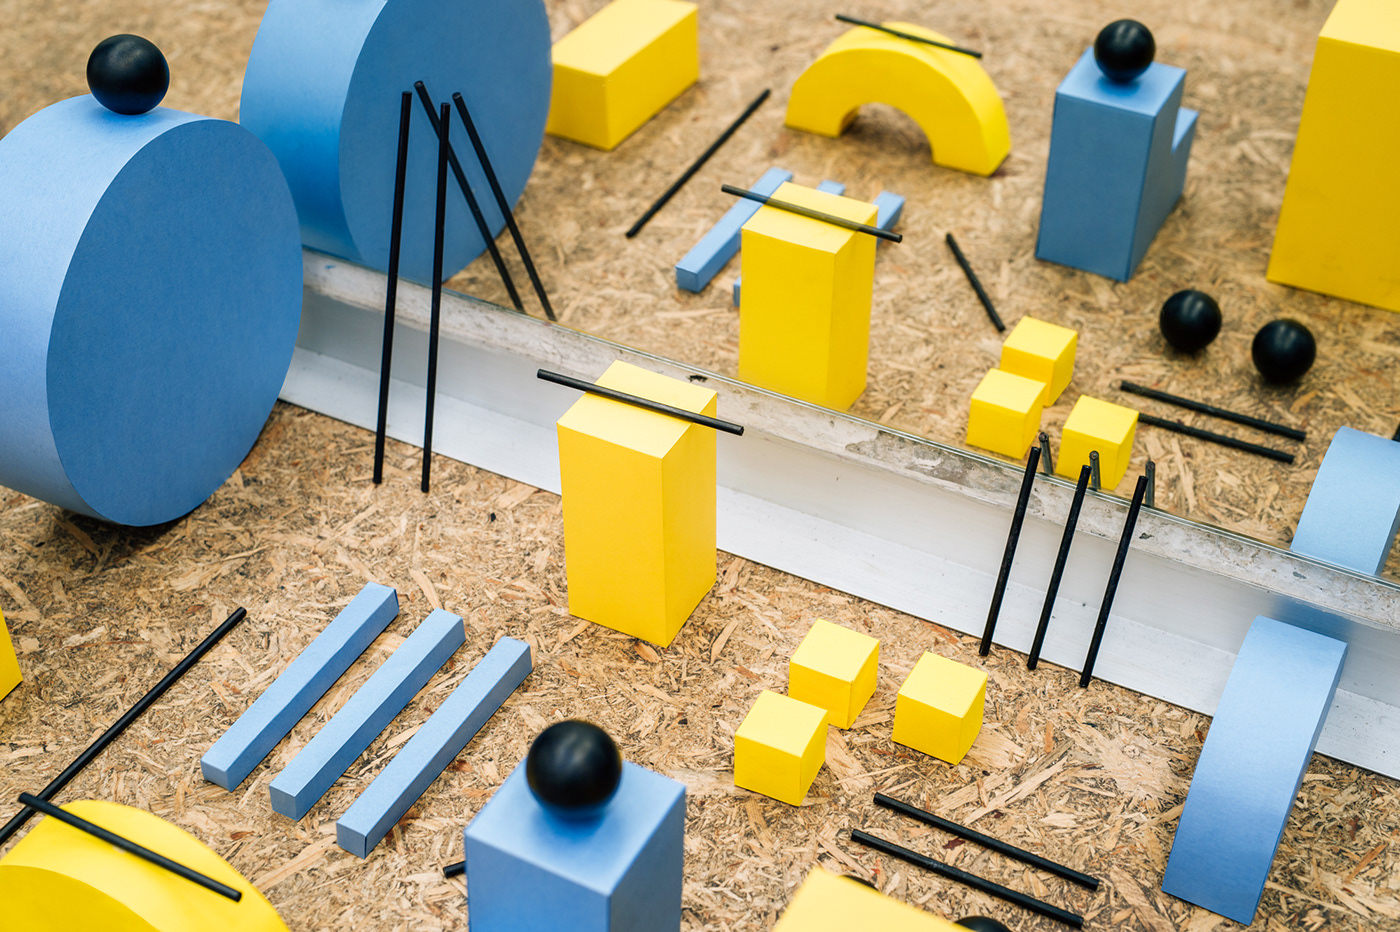 branding  Signage geometric wire squash yellow and blue Multidisciplinary mexico city set design  crafts  